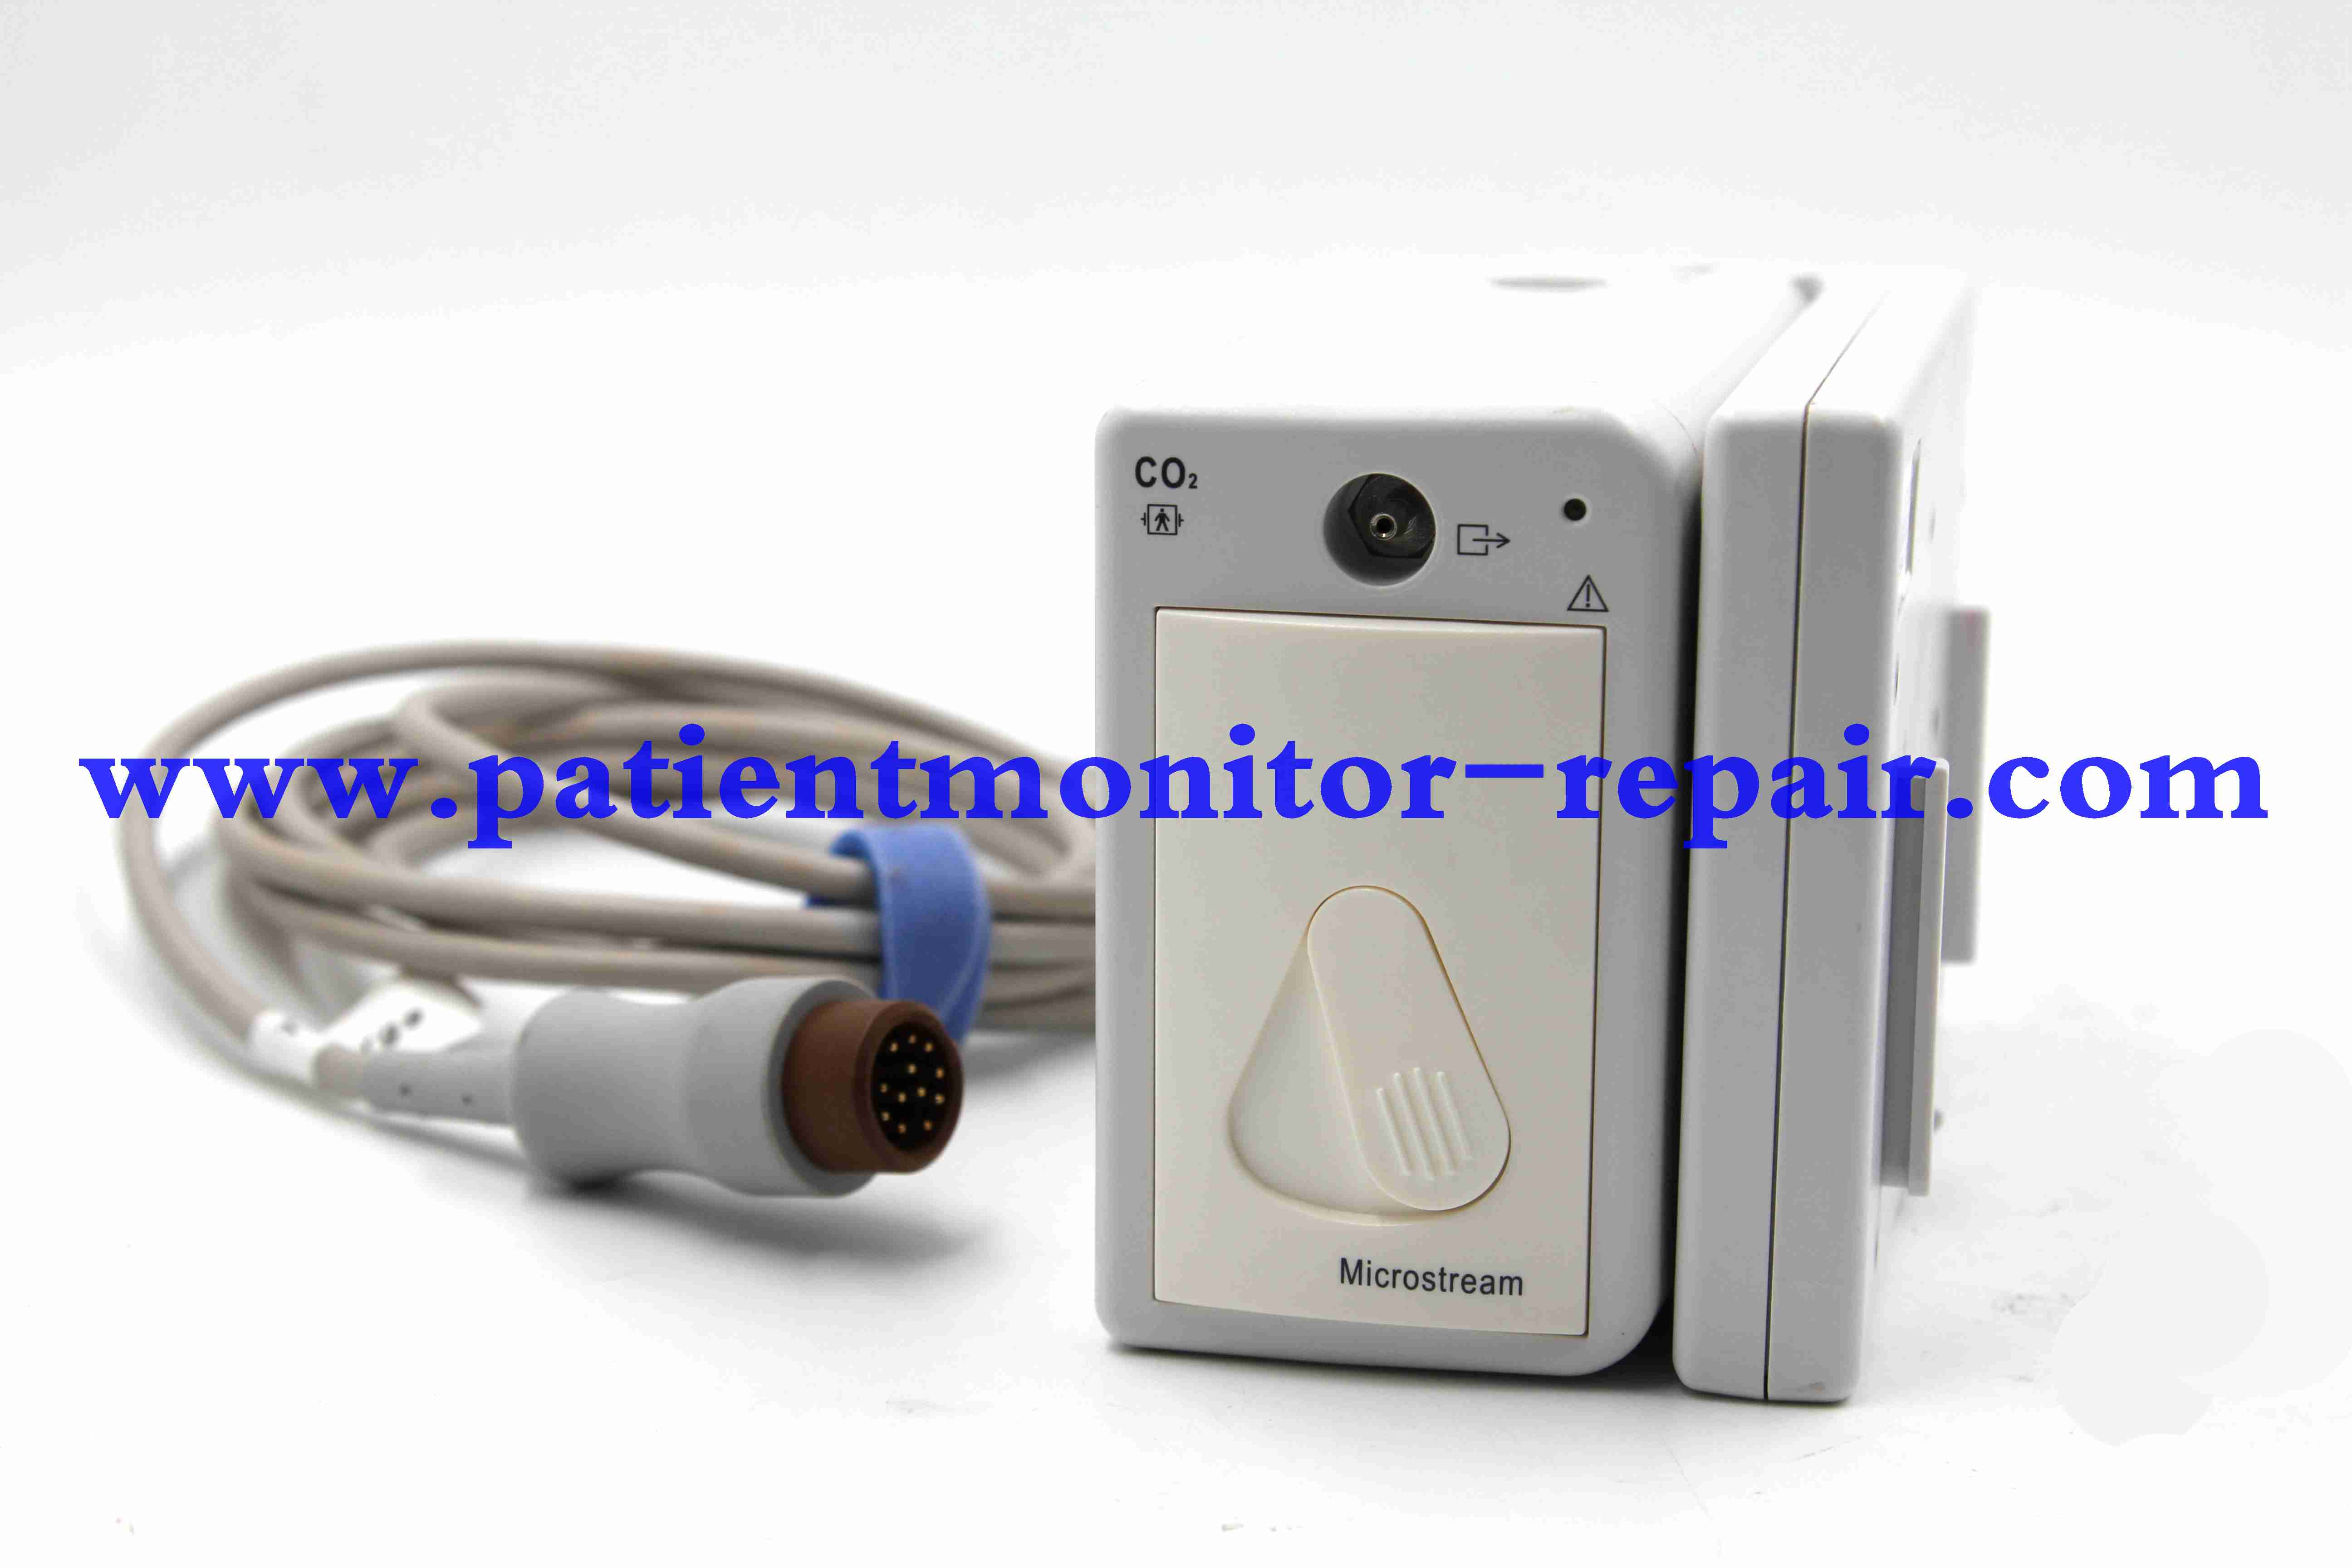 Mindray iPM8 iPM10 iPM12 patient monitor Microstream CO2 module